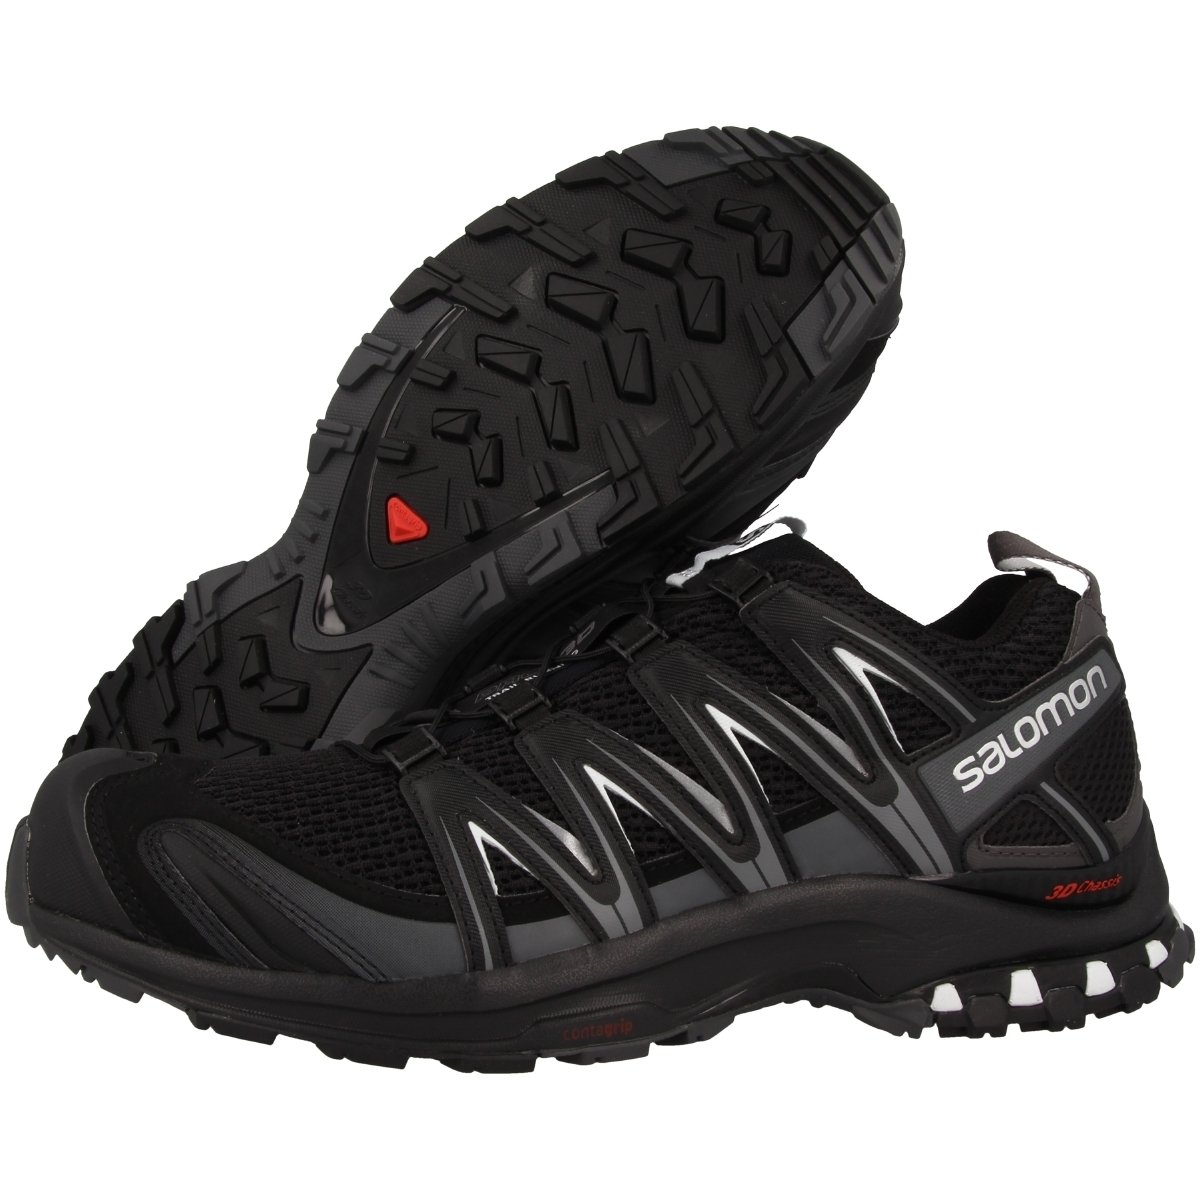 Salomon Men's XA PRO 3D Trail Running Shoes, Black/Magnet/Quiet Shade, 9.5